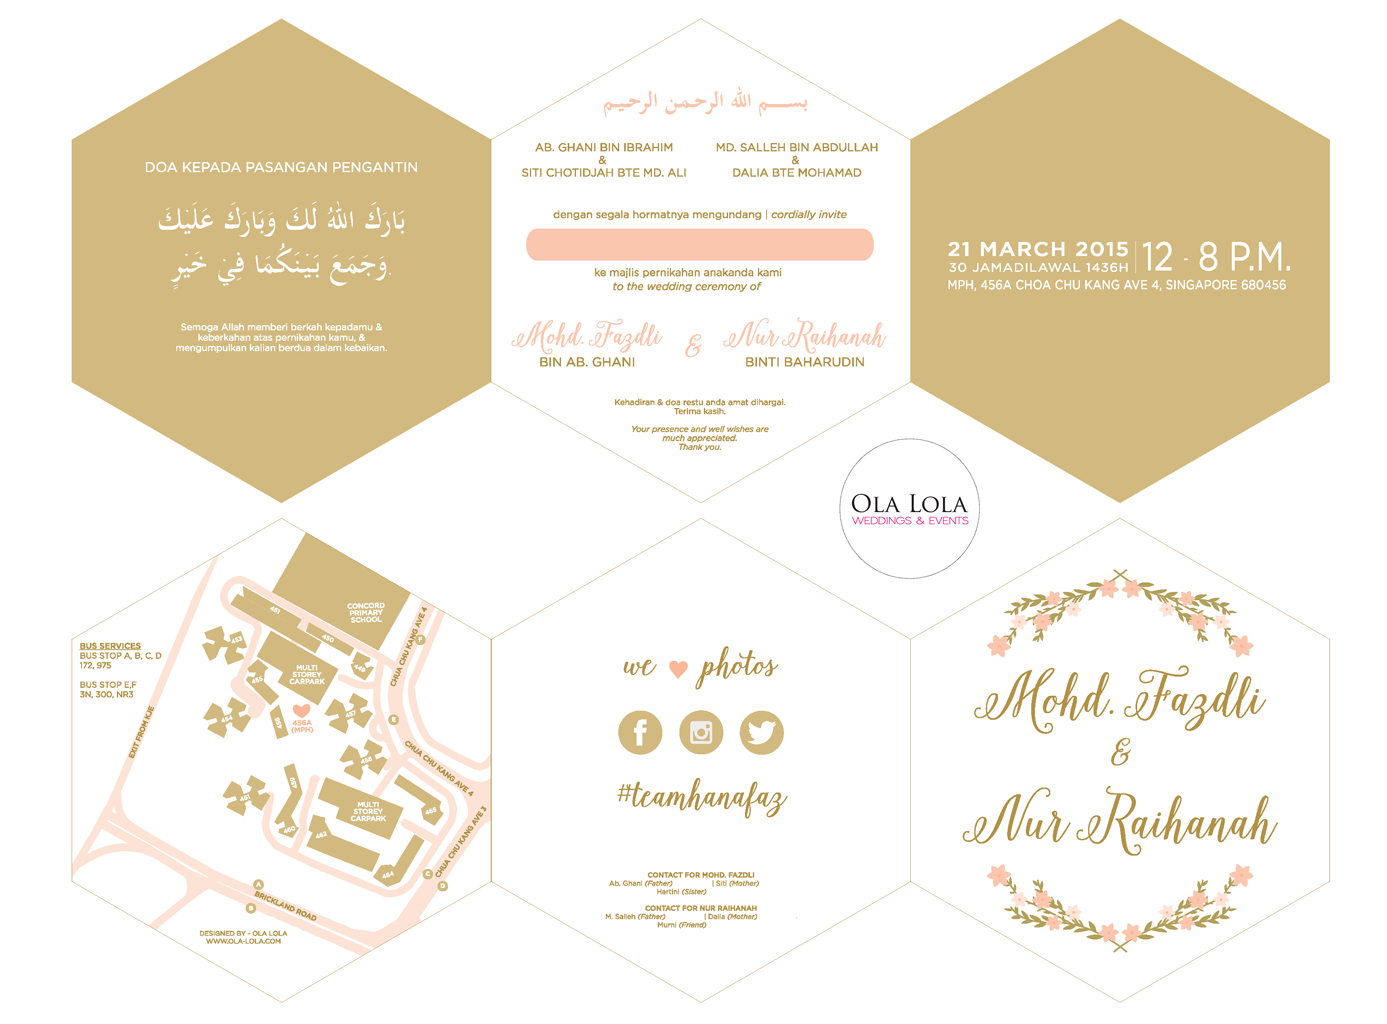 #teamhanafaz wedding invitations